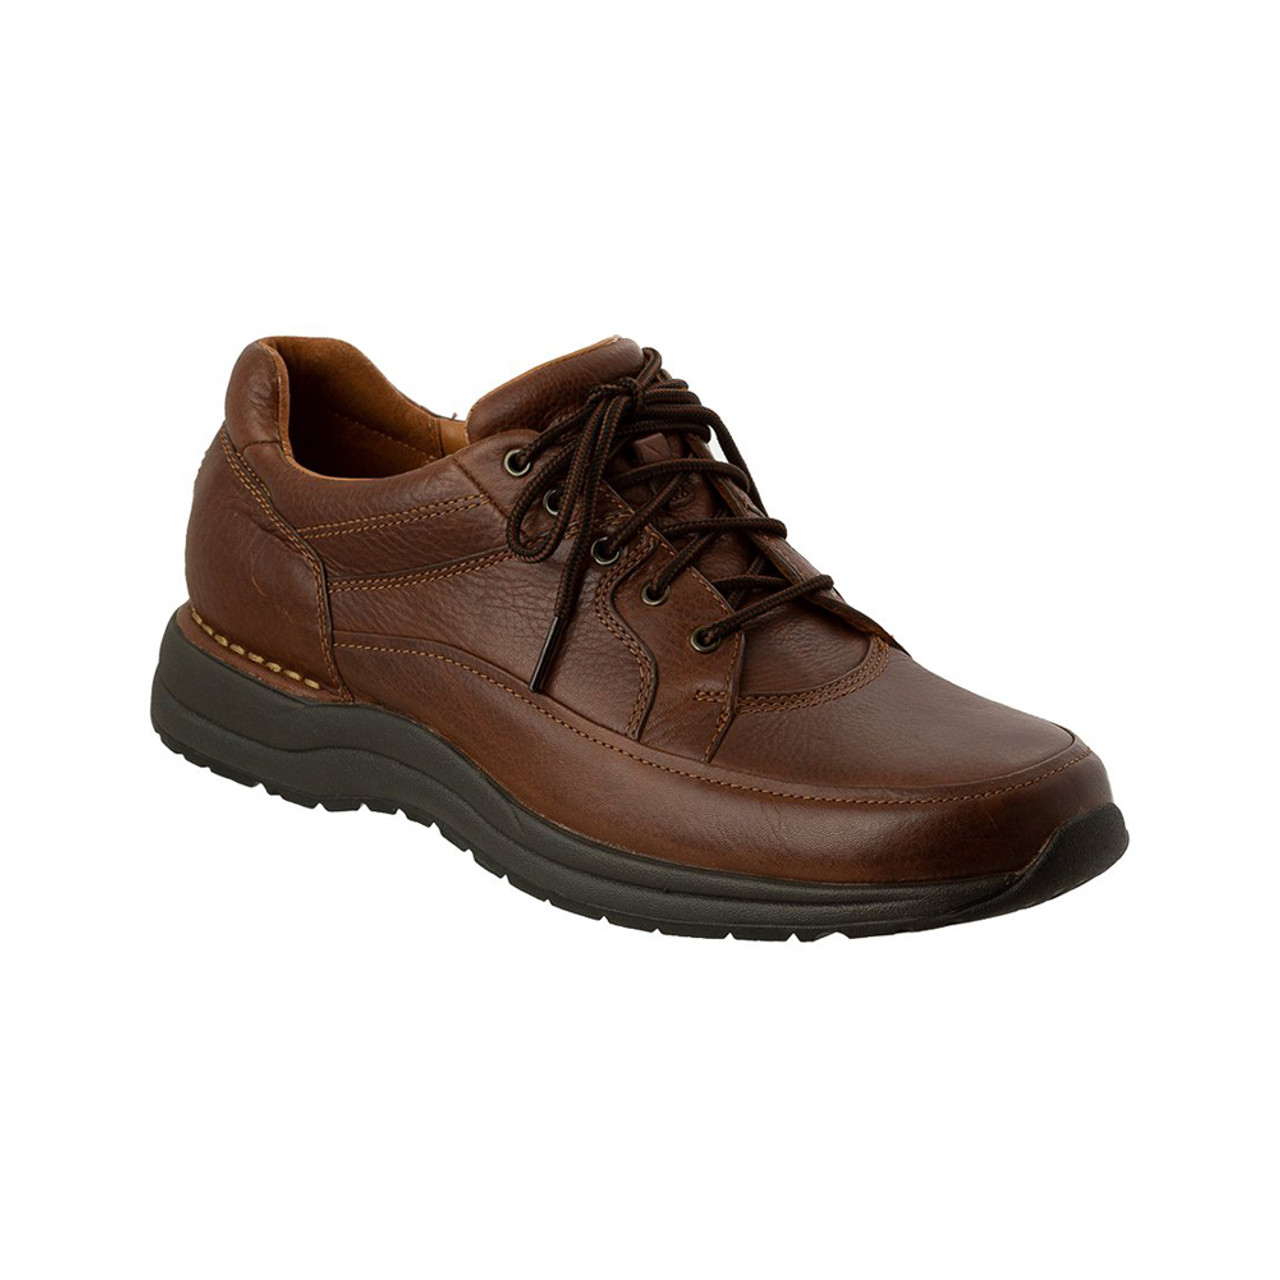 Rockport Men's Edge Hill II Walking Shoes - Brown | Discount Rockport ...